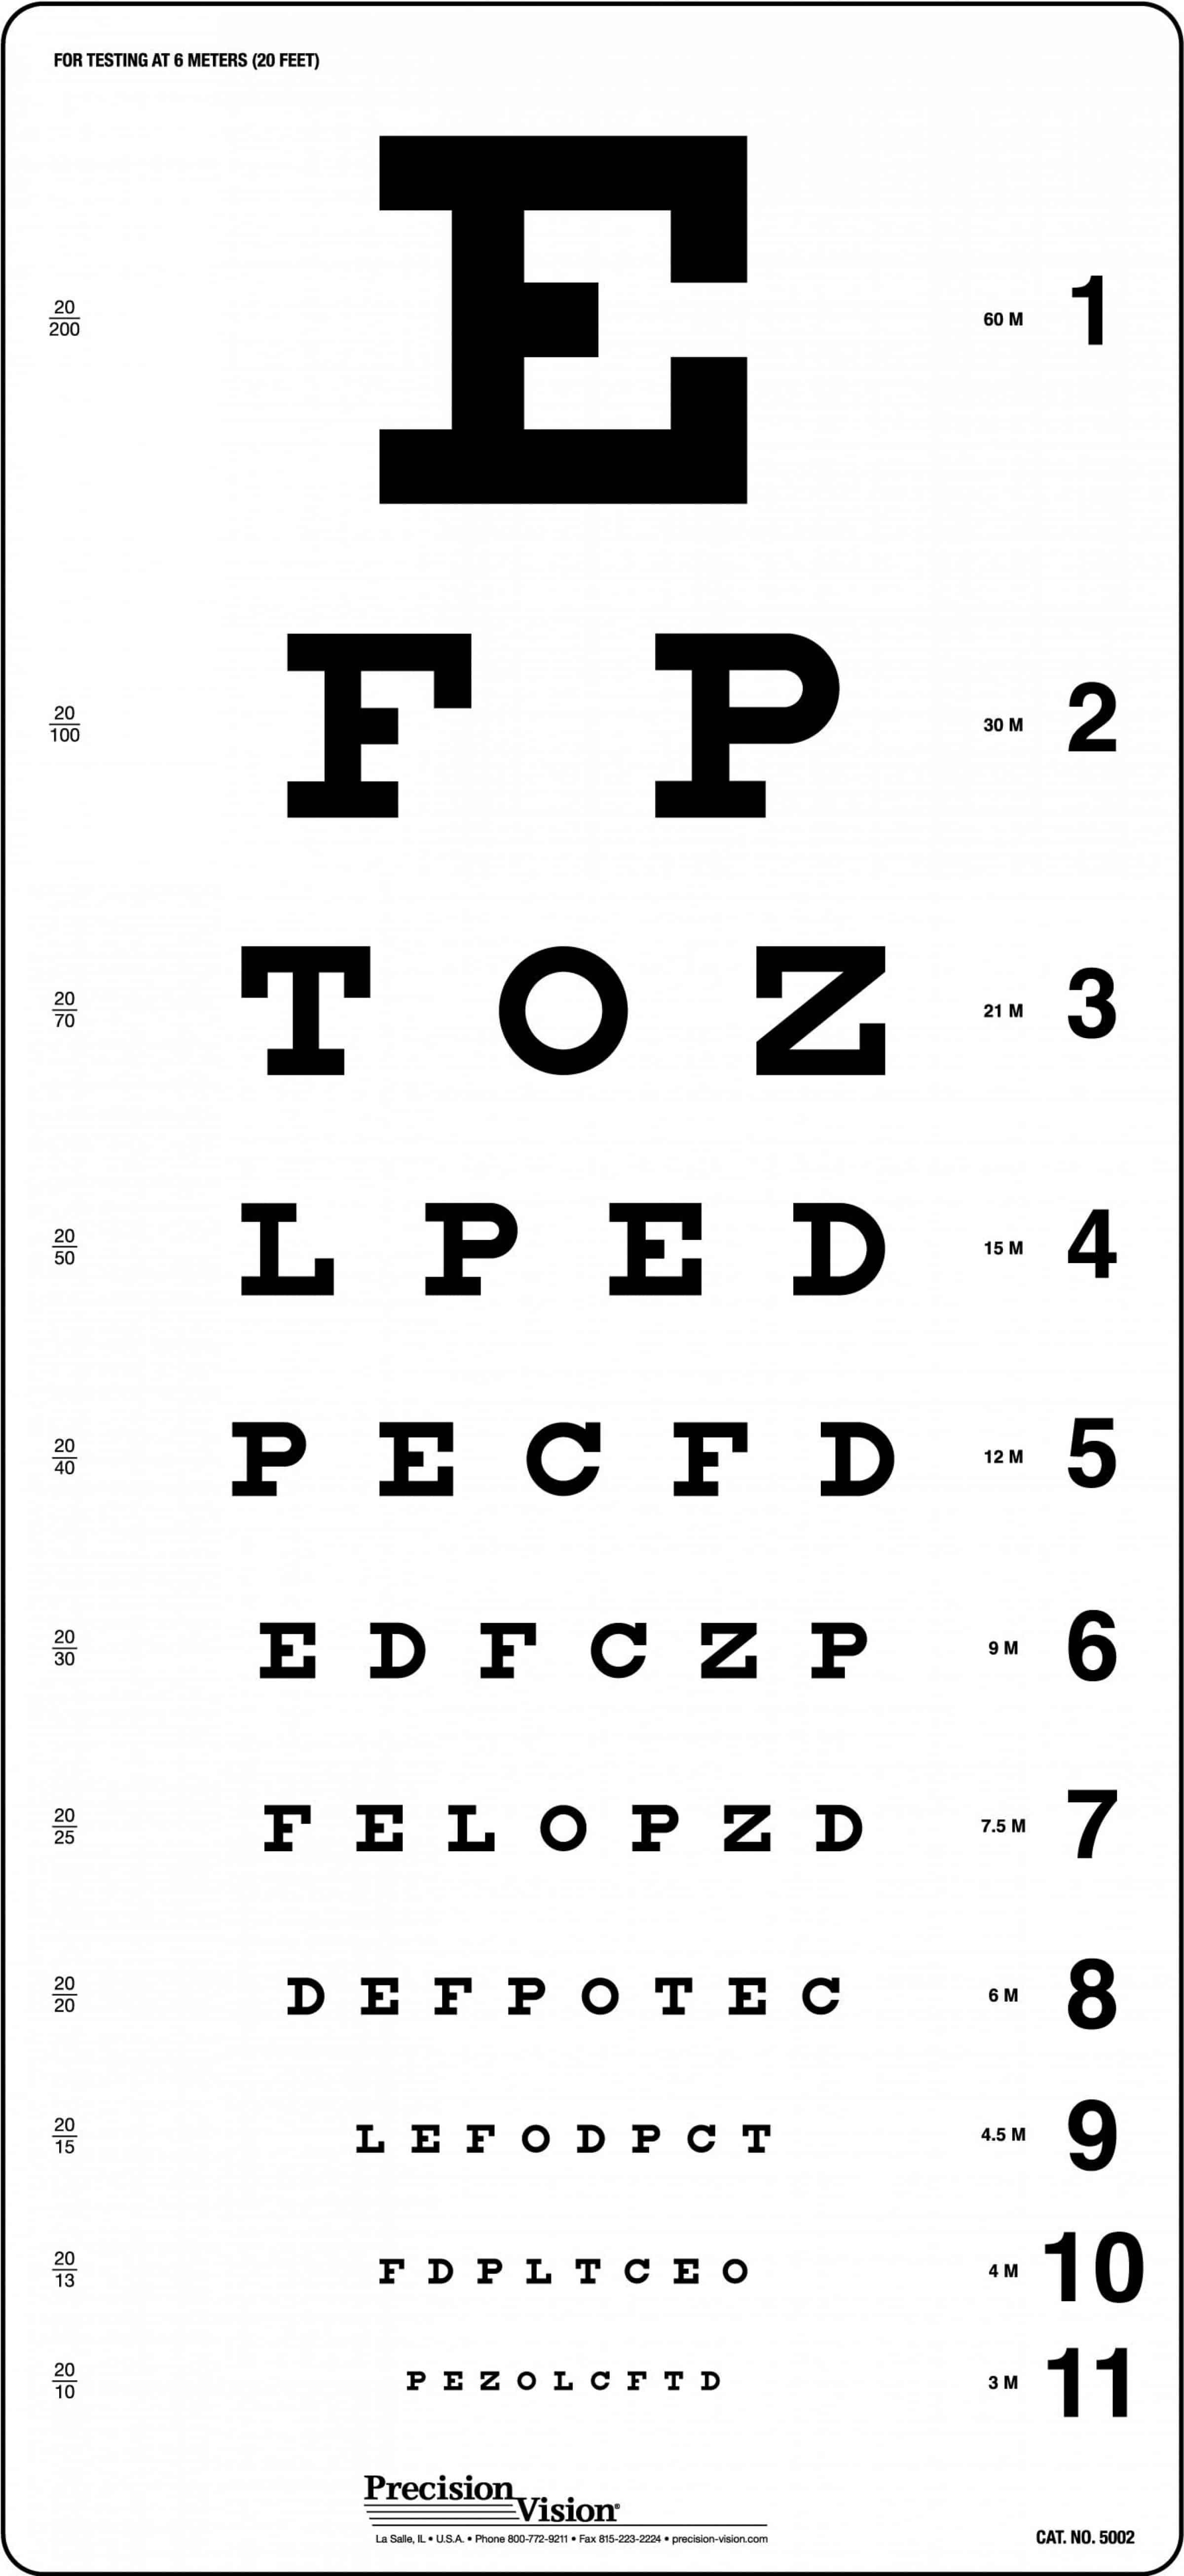 snellen eye test charts interpretation precision vision